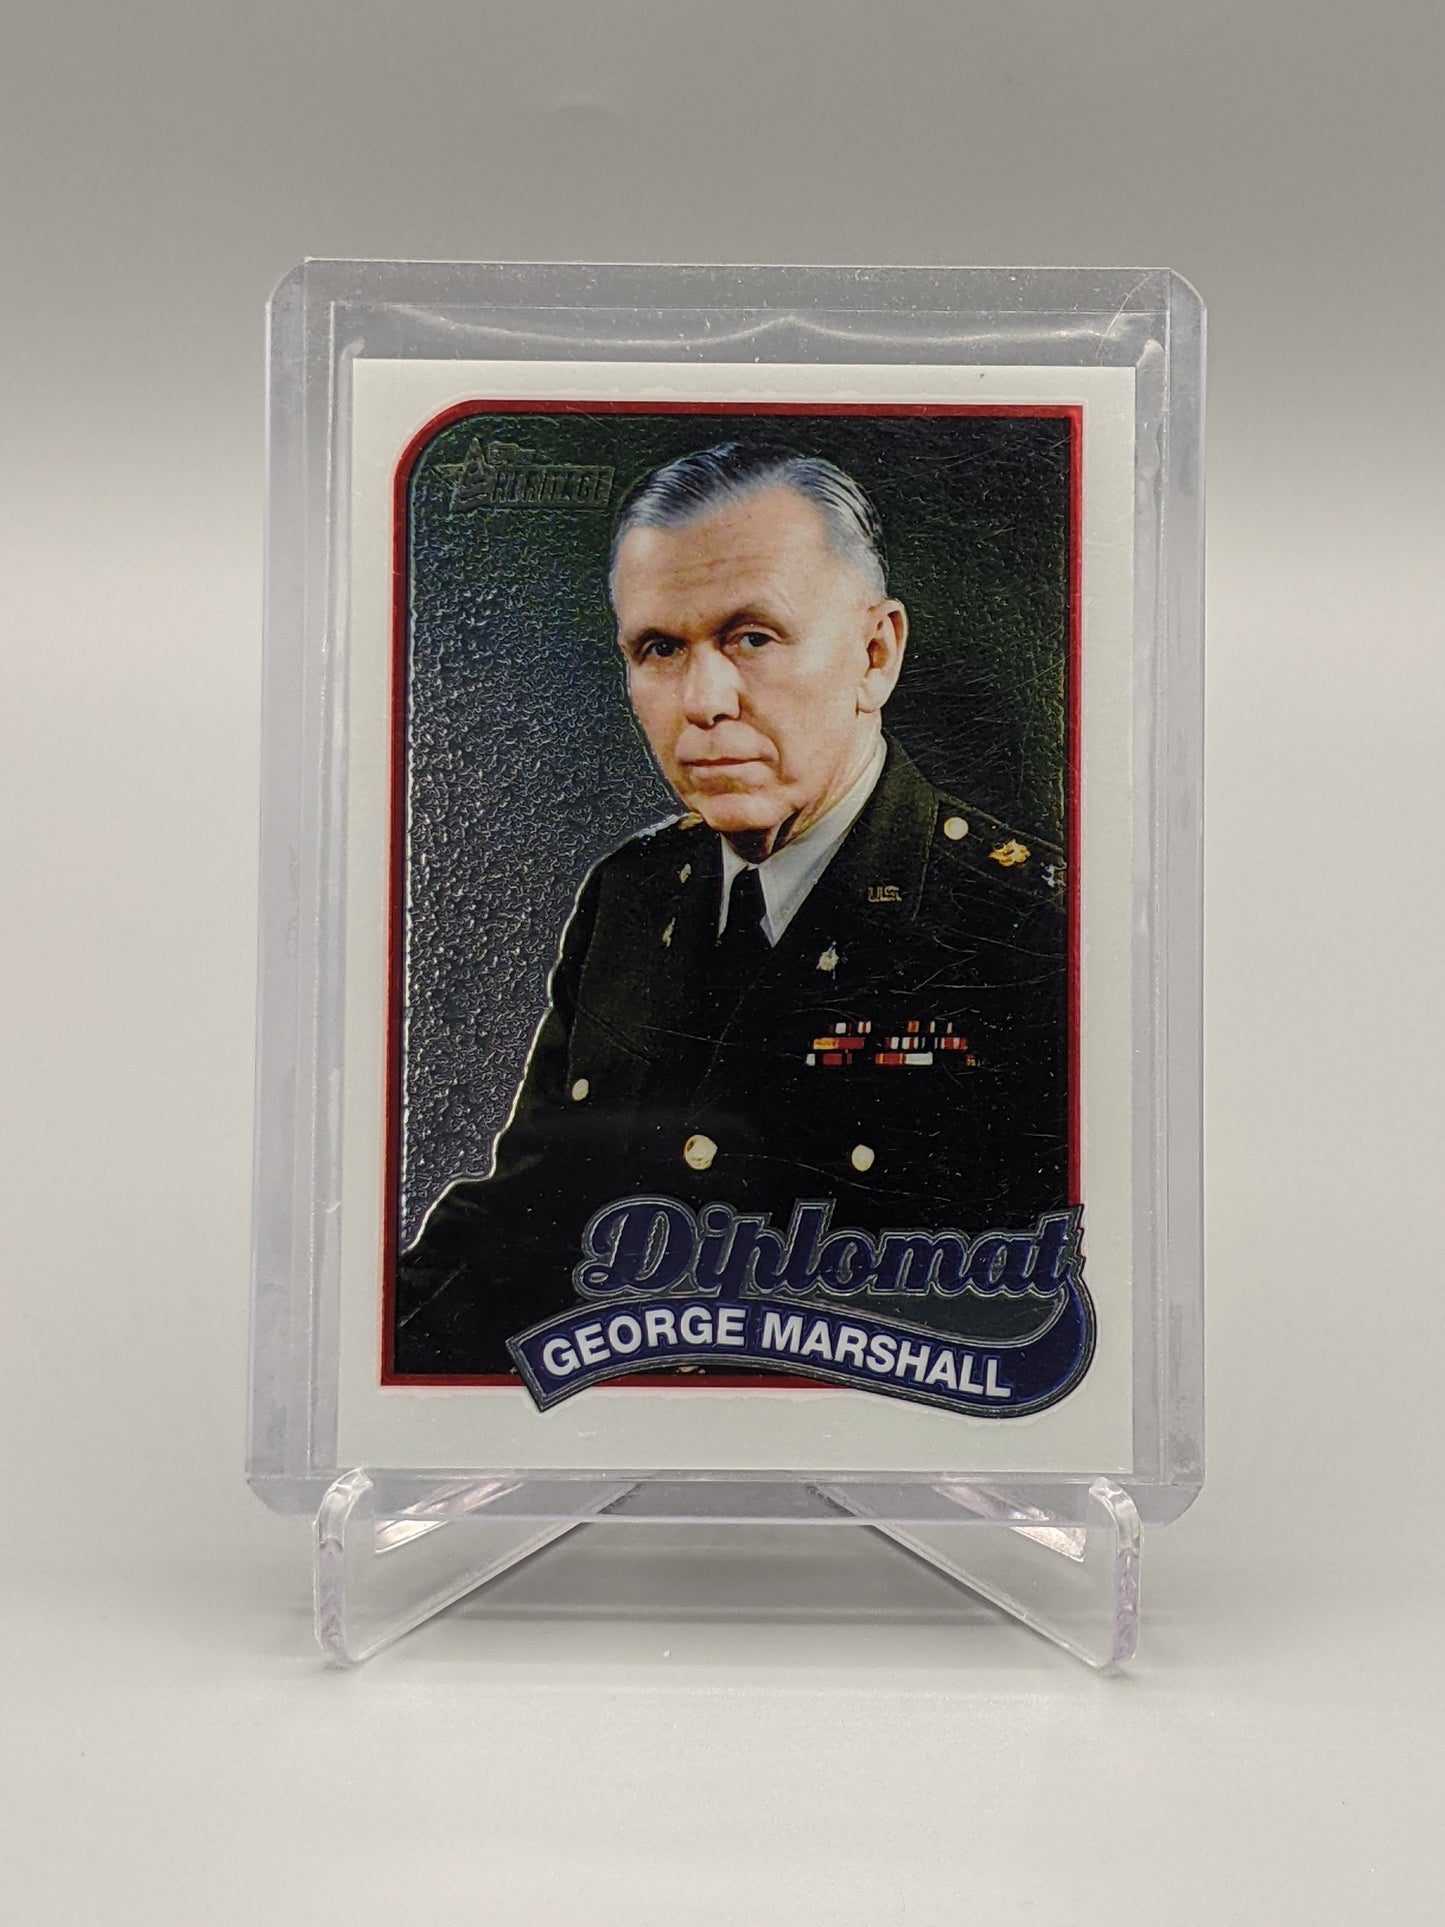 2009 Topps American Heritage Heroes Chrome #C82 George Marshall #/1776